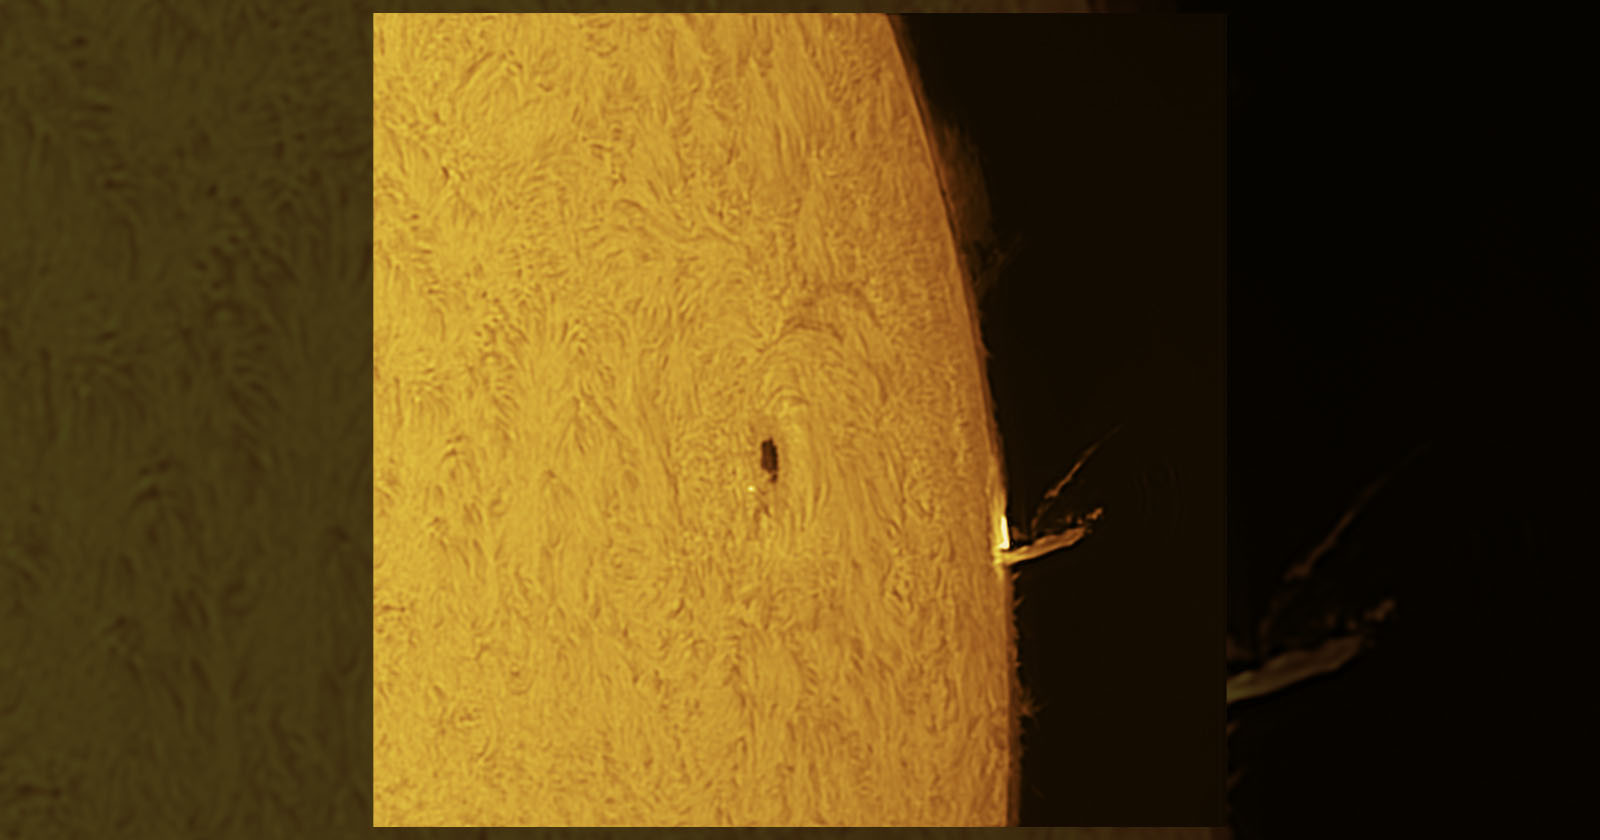  astrophotographer captures massive explosion sun surface 